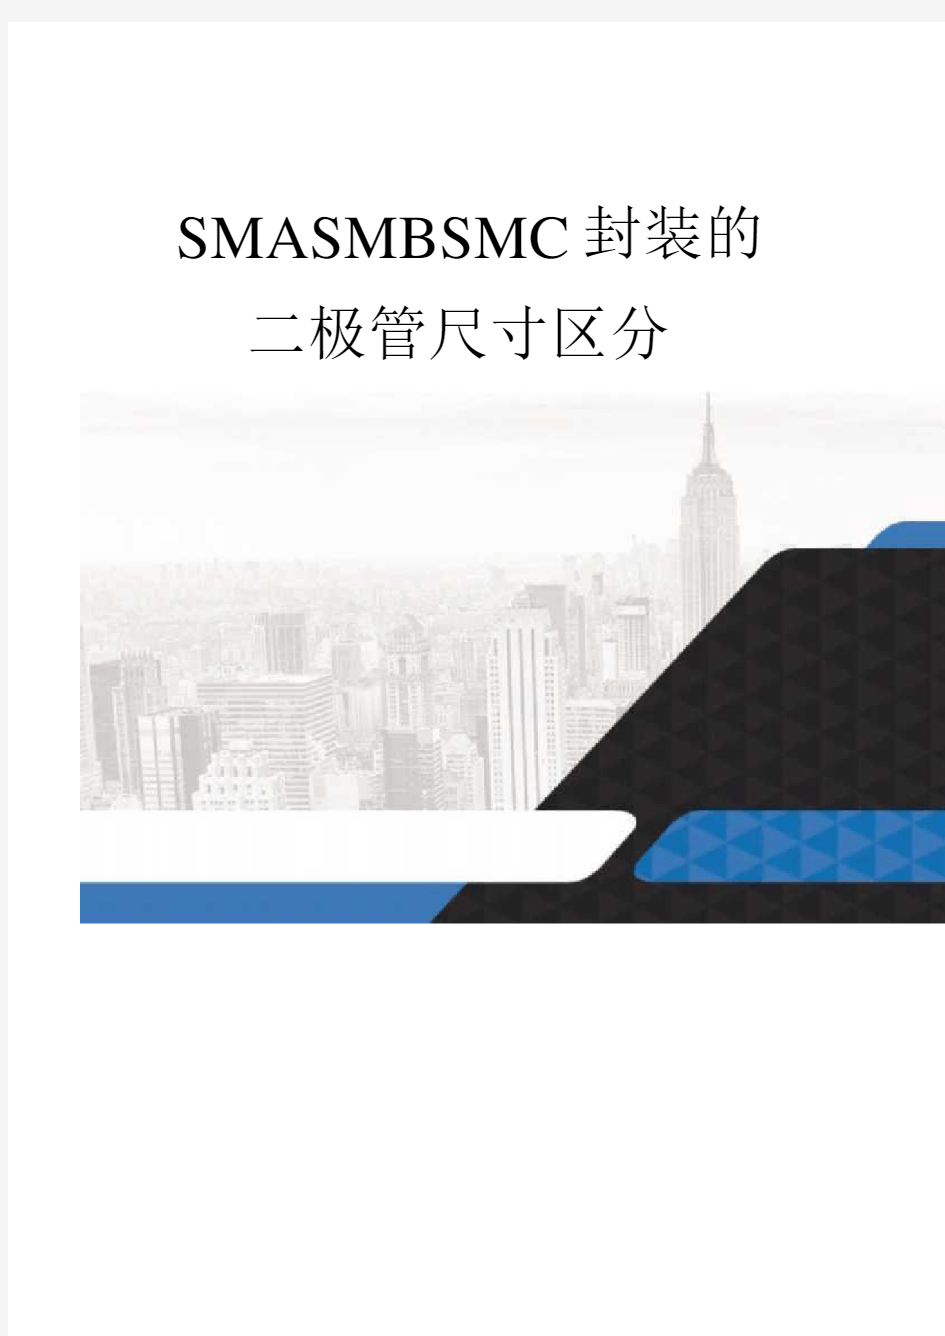 SMASMBSMC封装的二极管尺寸区分